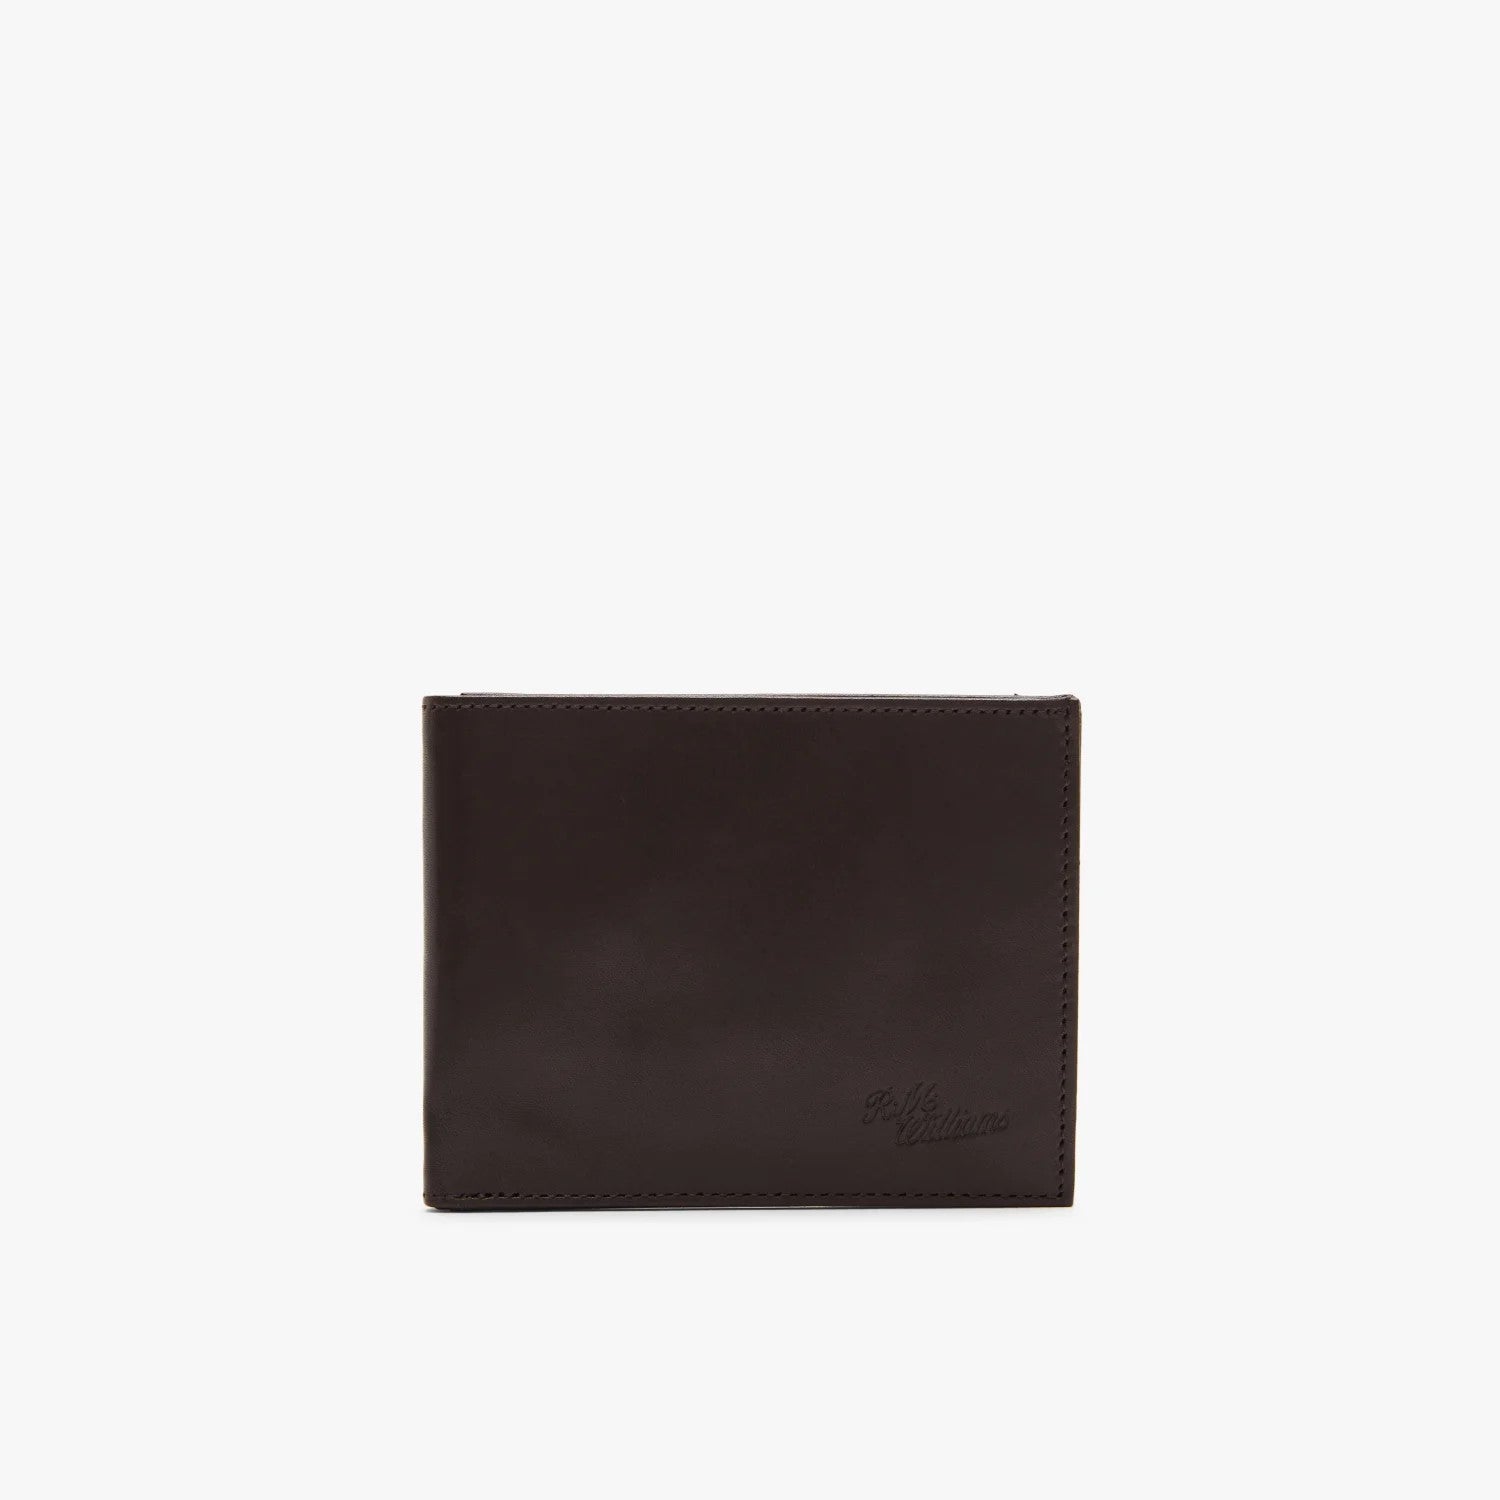 R.M Williams Singleton Wallet With Coin Pouch in Dark Brown